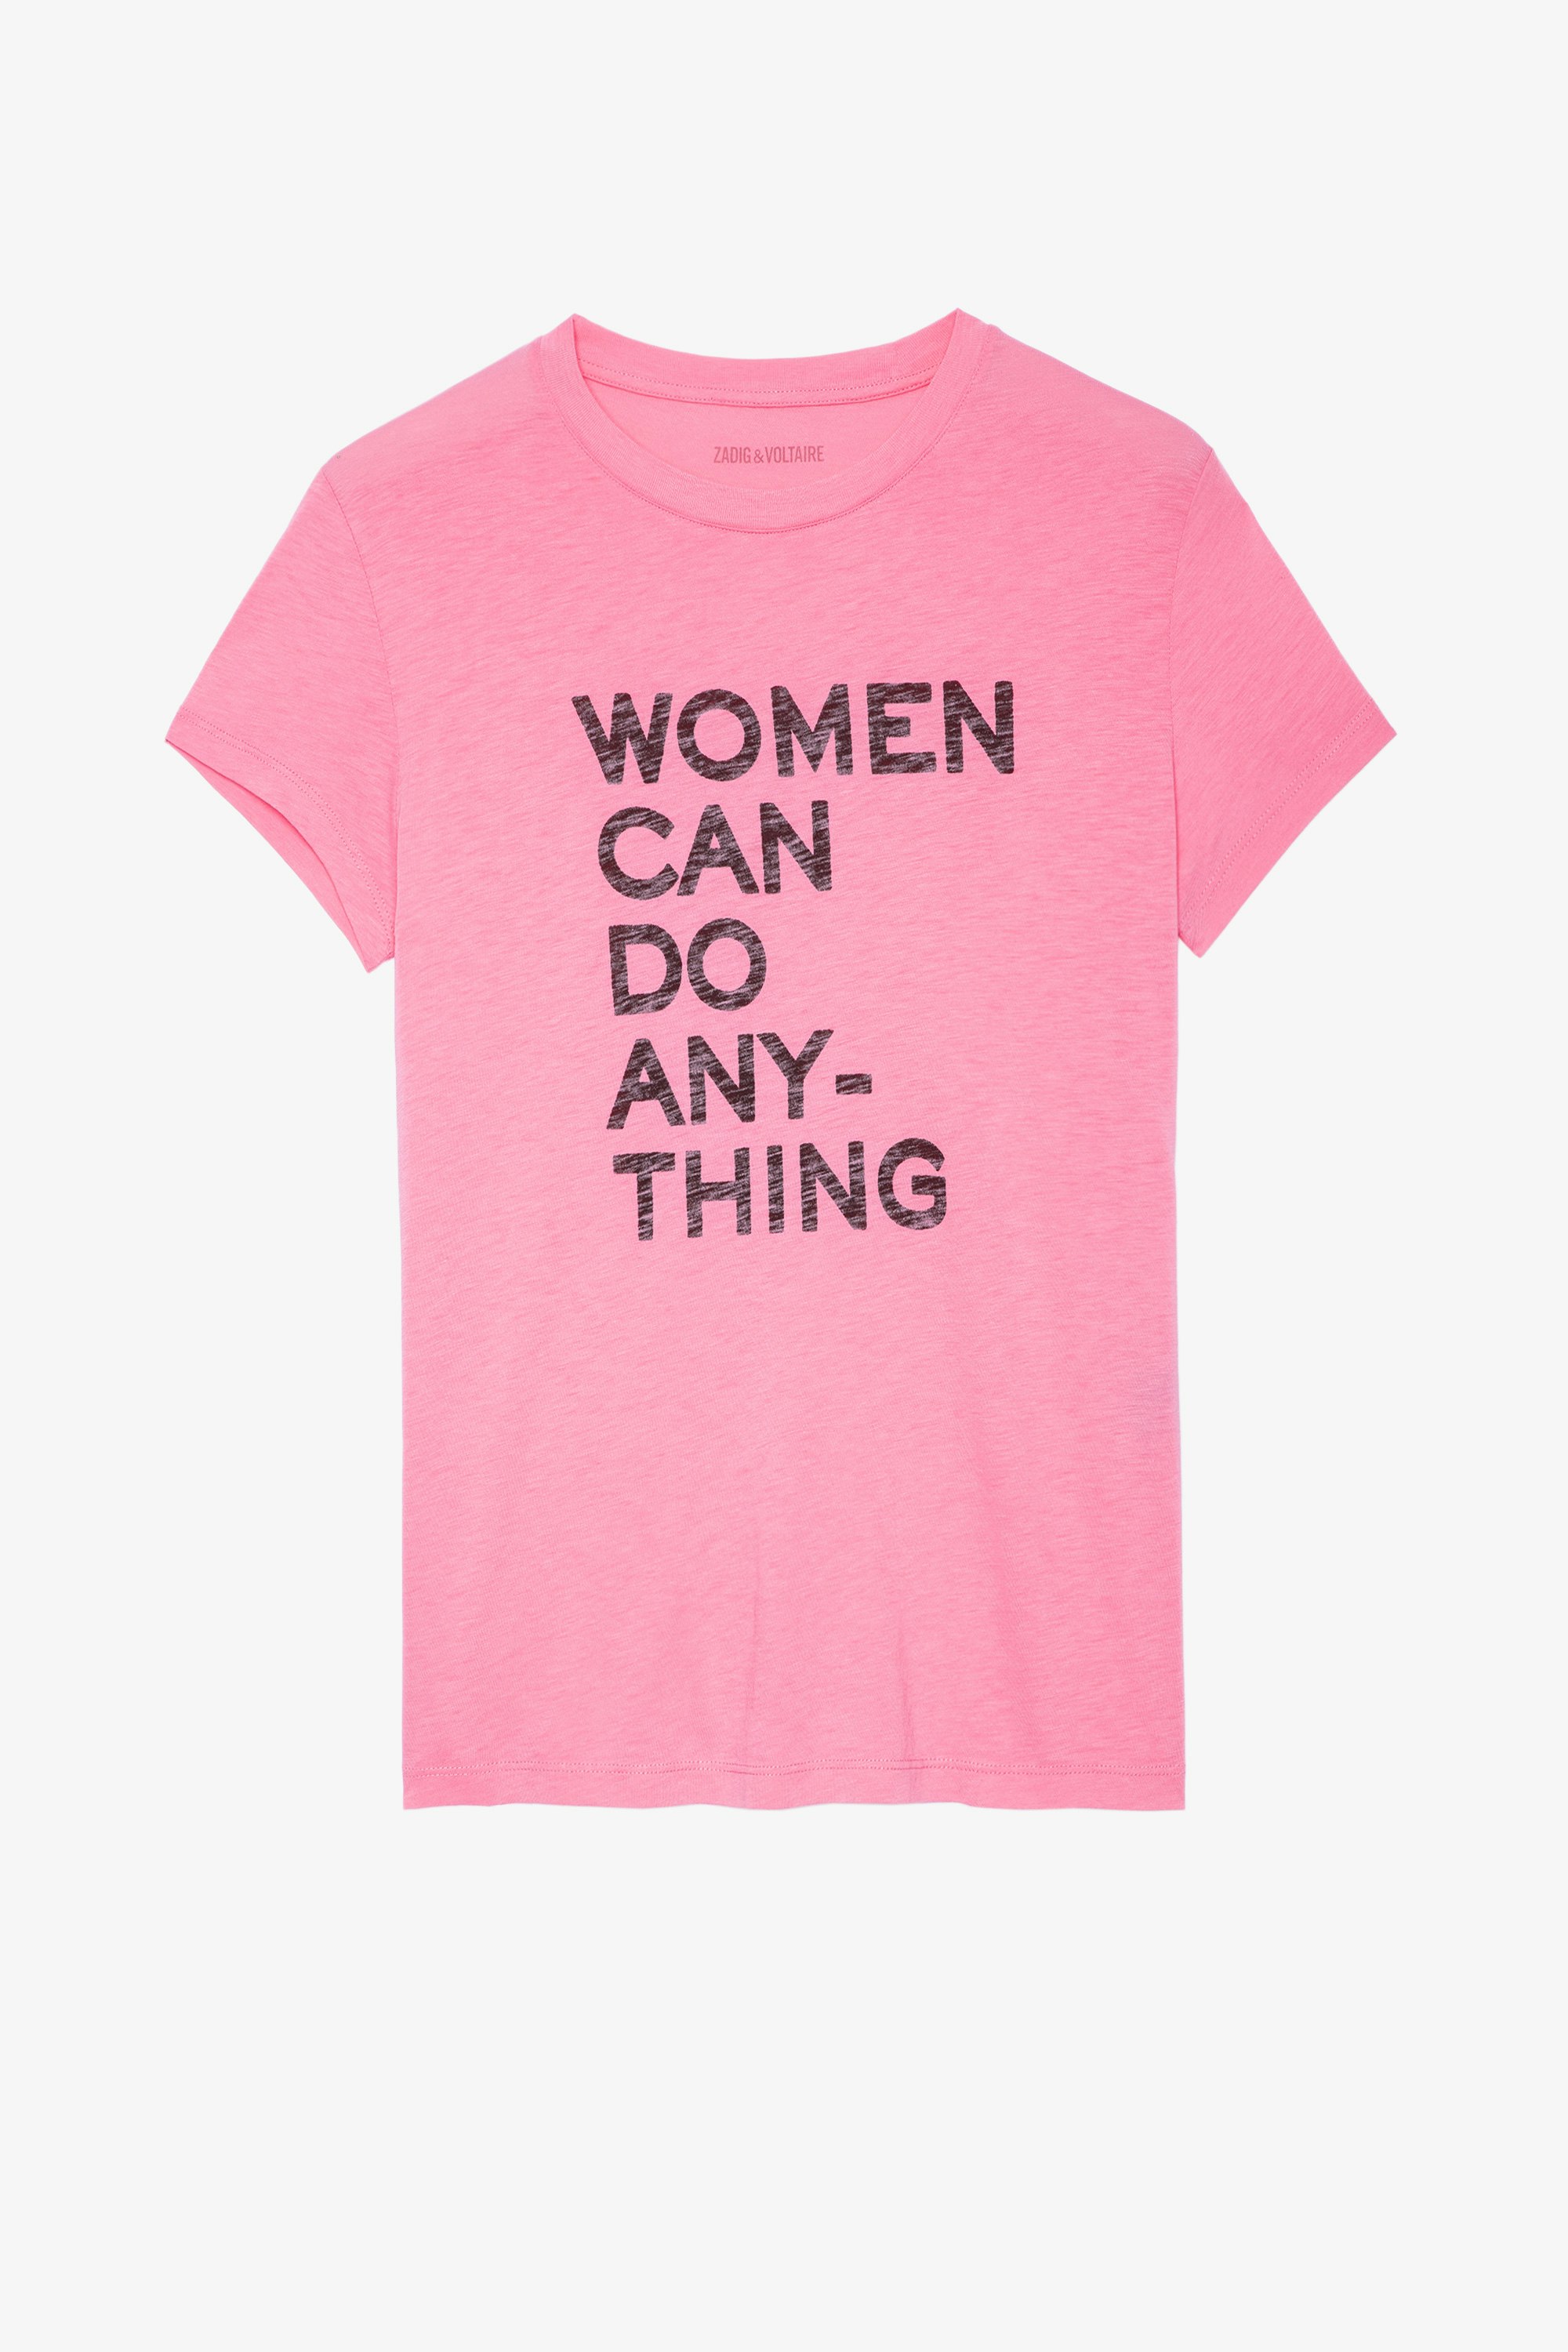 Walk Women can do anything T-shirt Women's pink cotton T-shirt with 'Women can do anything' slogan